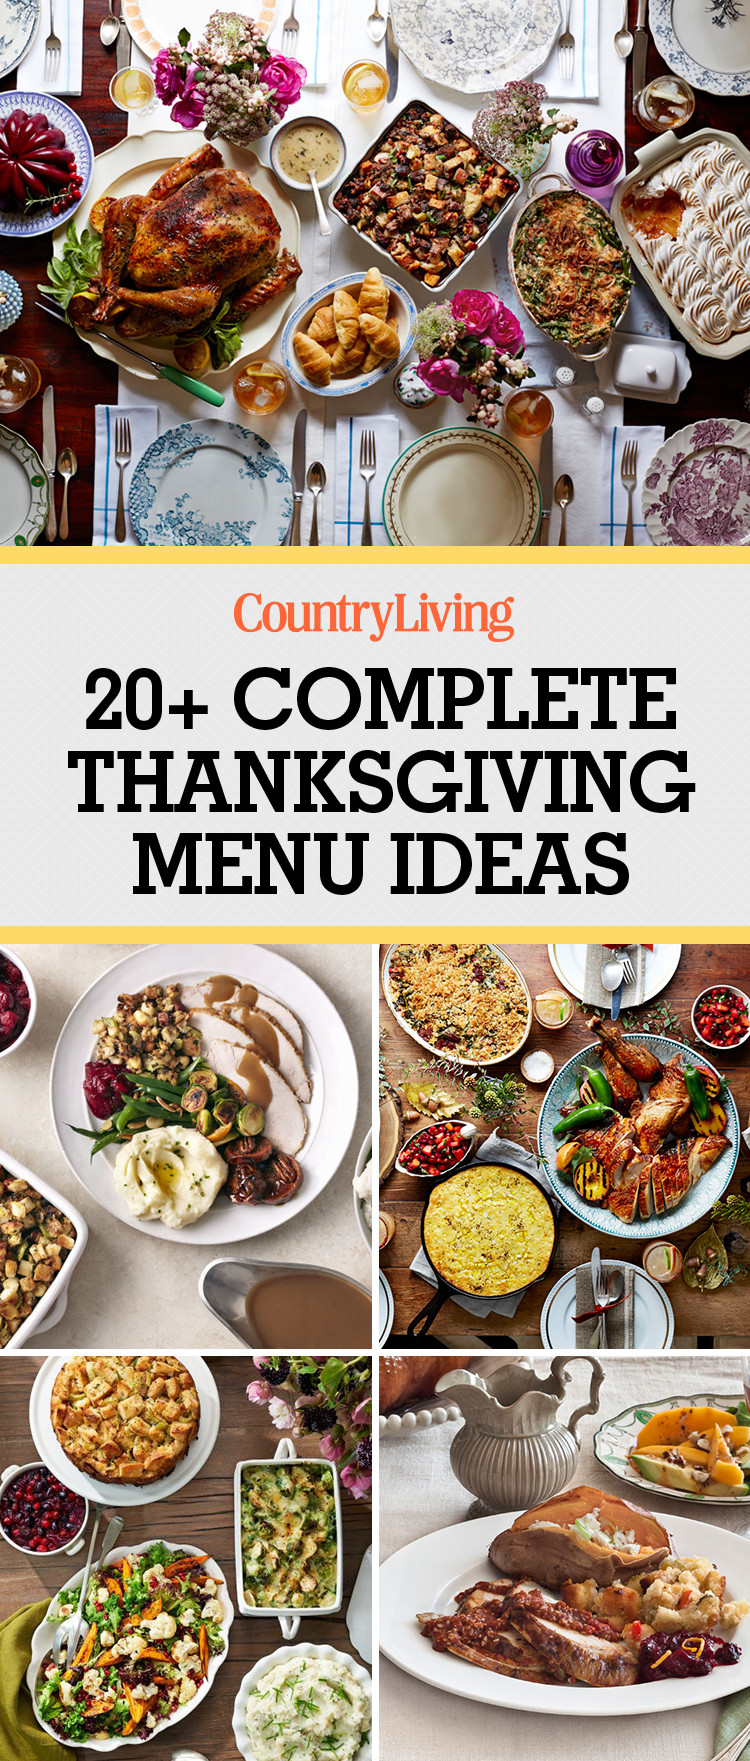 Thanksgiving Dinner Ideas
 26 Thanksgiving Menu Ideas Thanksgiving Dinner Menu Recipes